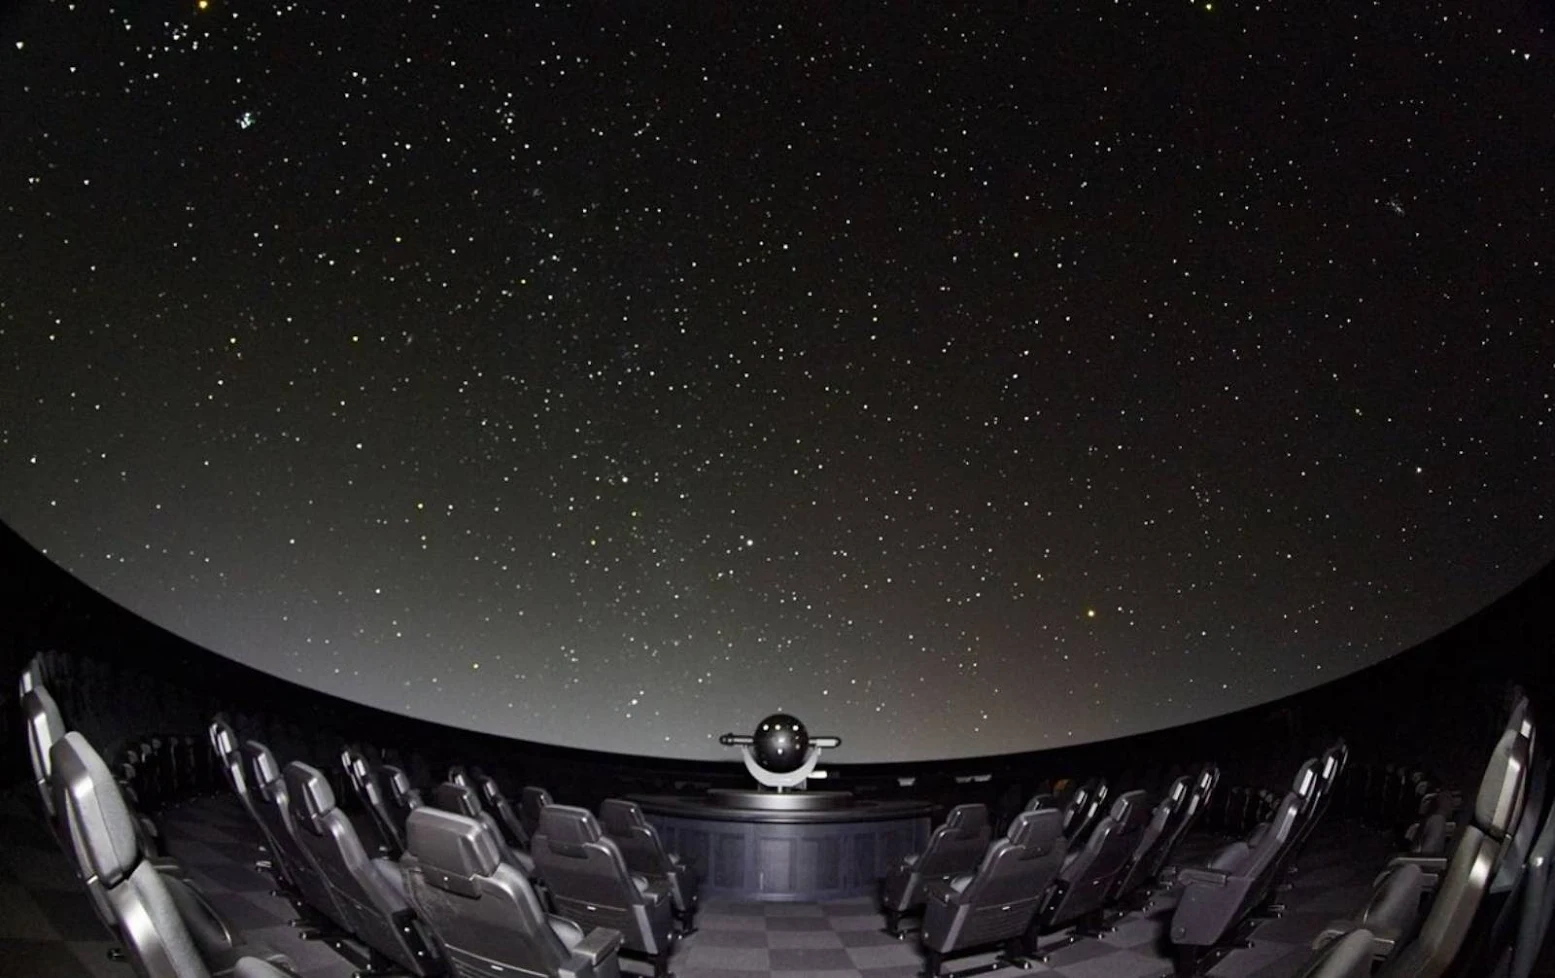 Rio Tinto Alcan Planetarium by Cardin Ramirez Julien